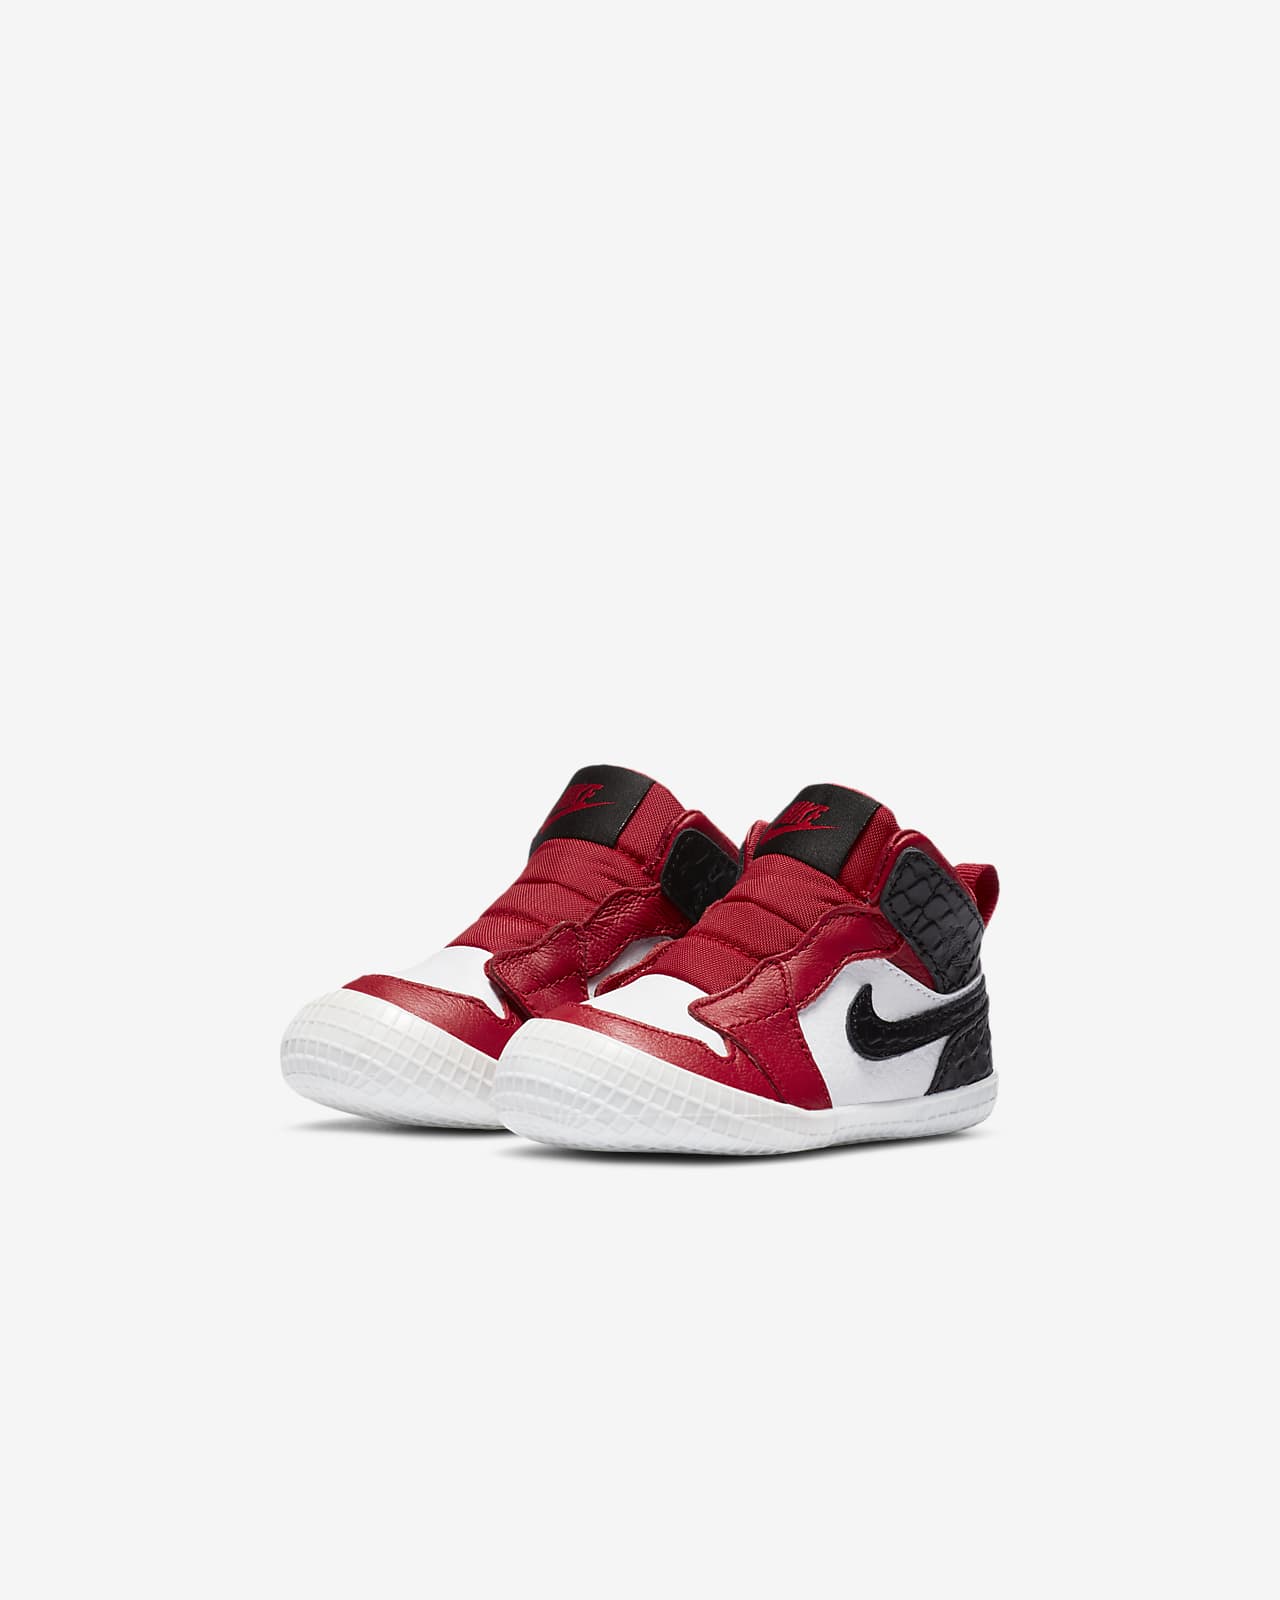 Jordan 1 Baby Cot Bootie. Nike LU